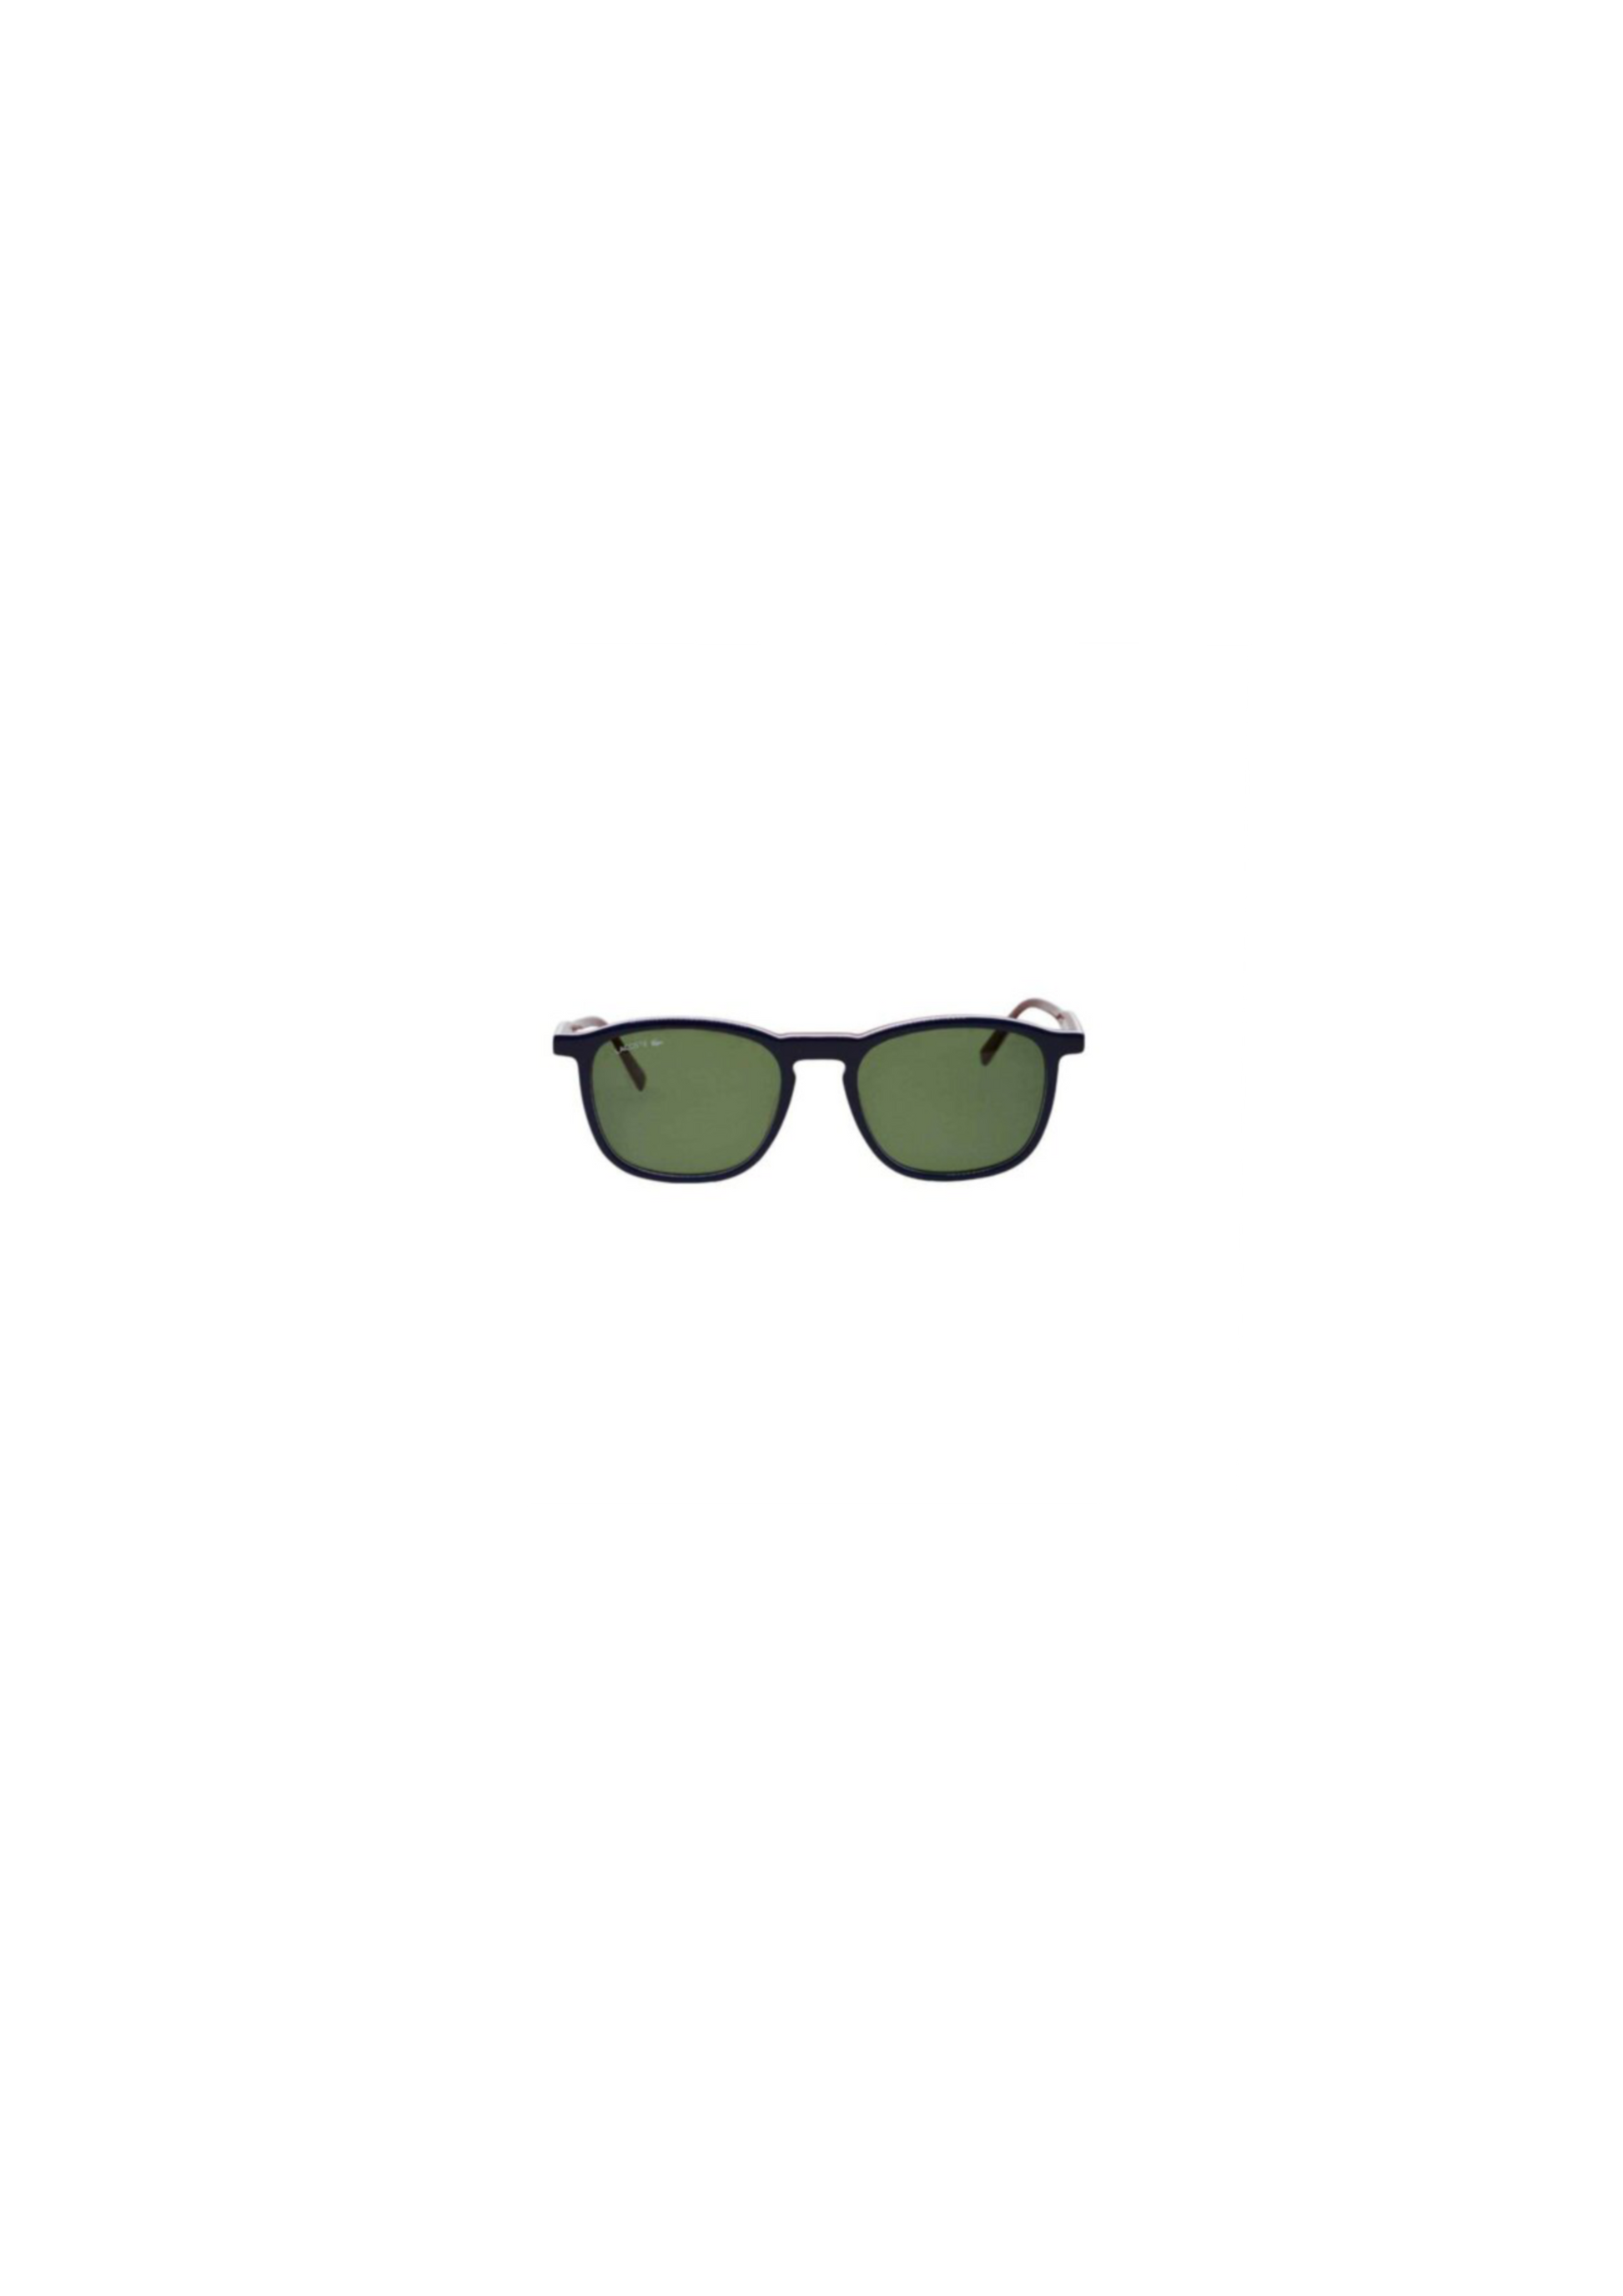 LACOSTE  L901 424 52  Lacoste Sunglasses. Series number: L901S. Color code: 424. Size: 52. Shape: Square. Lens Width: 52 mm. Lens Bridge: 19 mm. Arm Length: 145 mm. 100% UV protection. Non-Polarized. Frame Material: Plastic. Frame Color: Blue/White/Green. Lenses Type: Green. Rim Style: Full-Rim. UPC/EAN code: 886895398817. Lacoste Green Square Unisex Sunglasses  L901S 424 52 Sunglasses Blue/White/Green Plastic Unisex, Adult